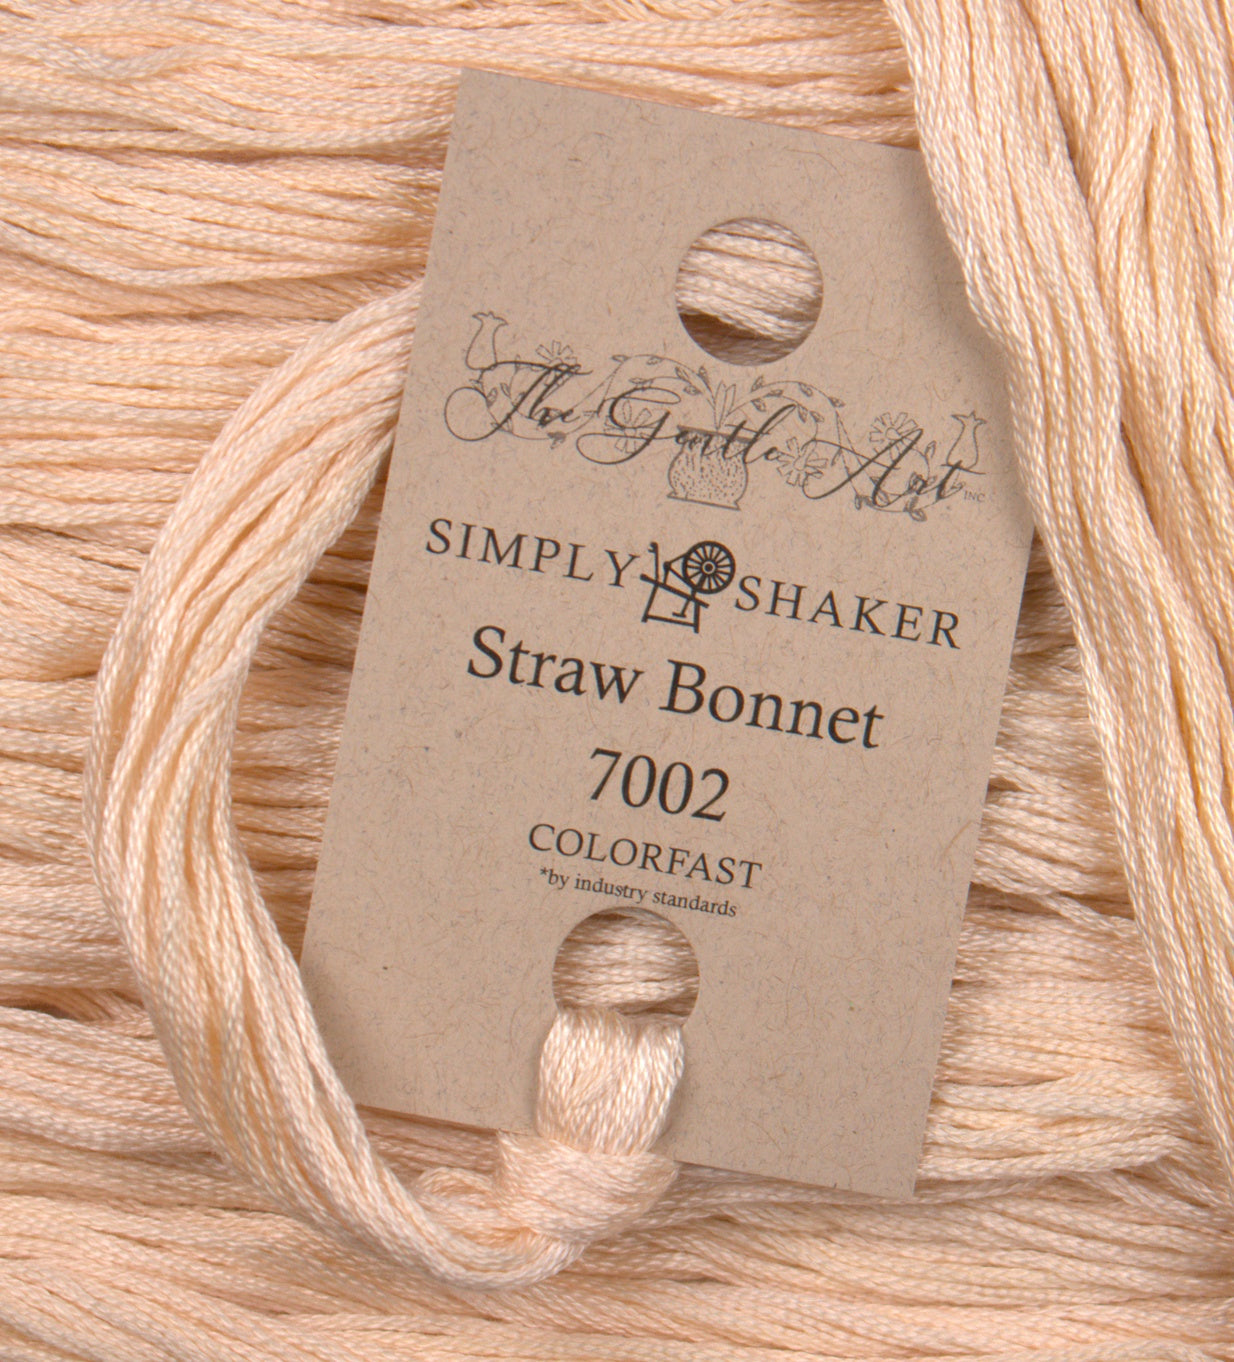 Straw Bonnet 7002